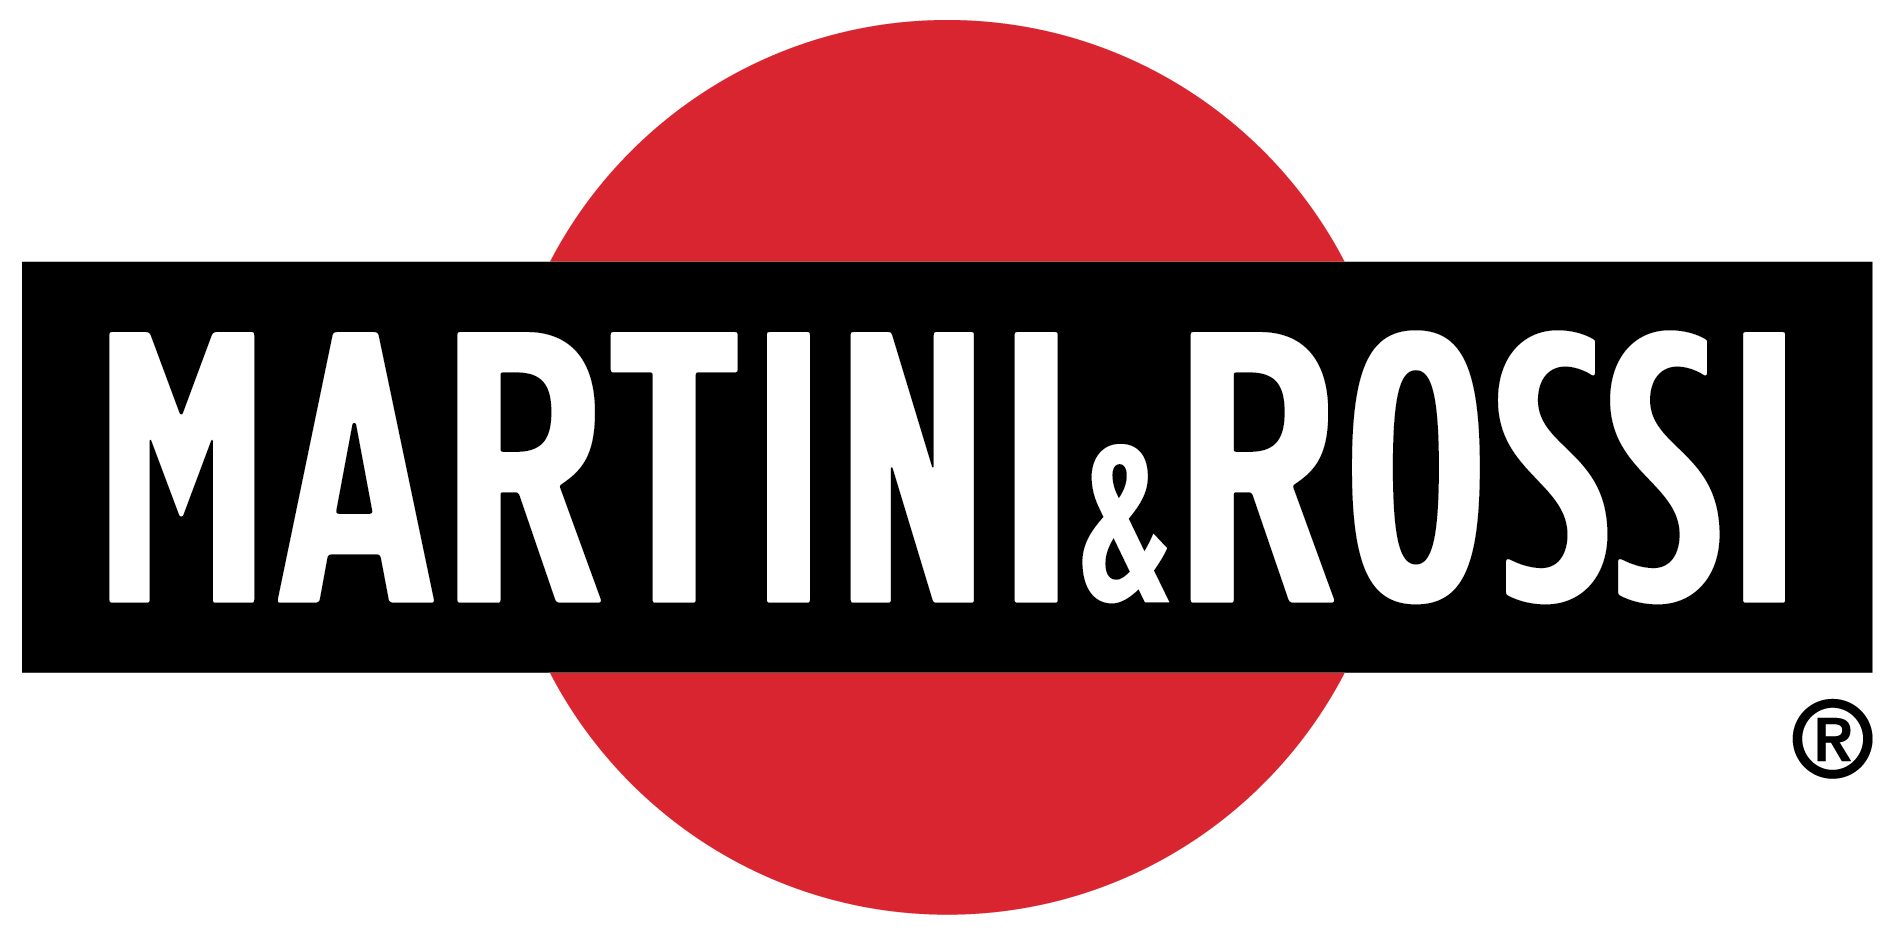 Martini and Rossie logo